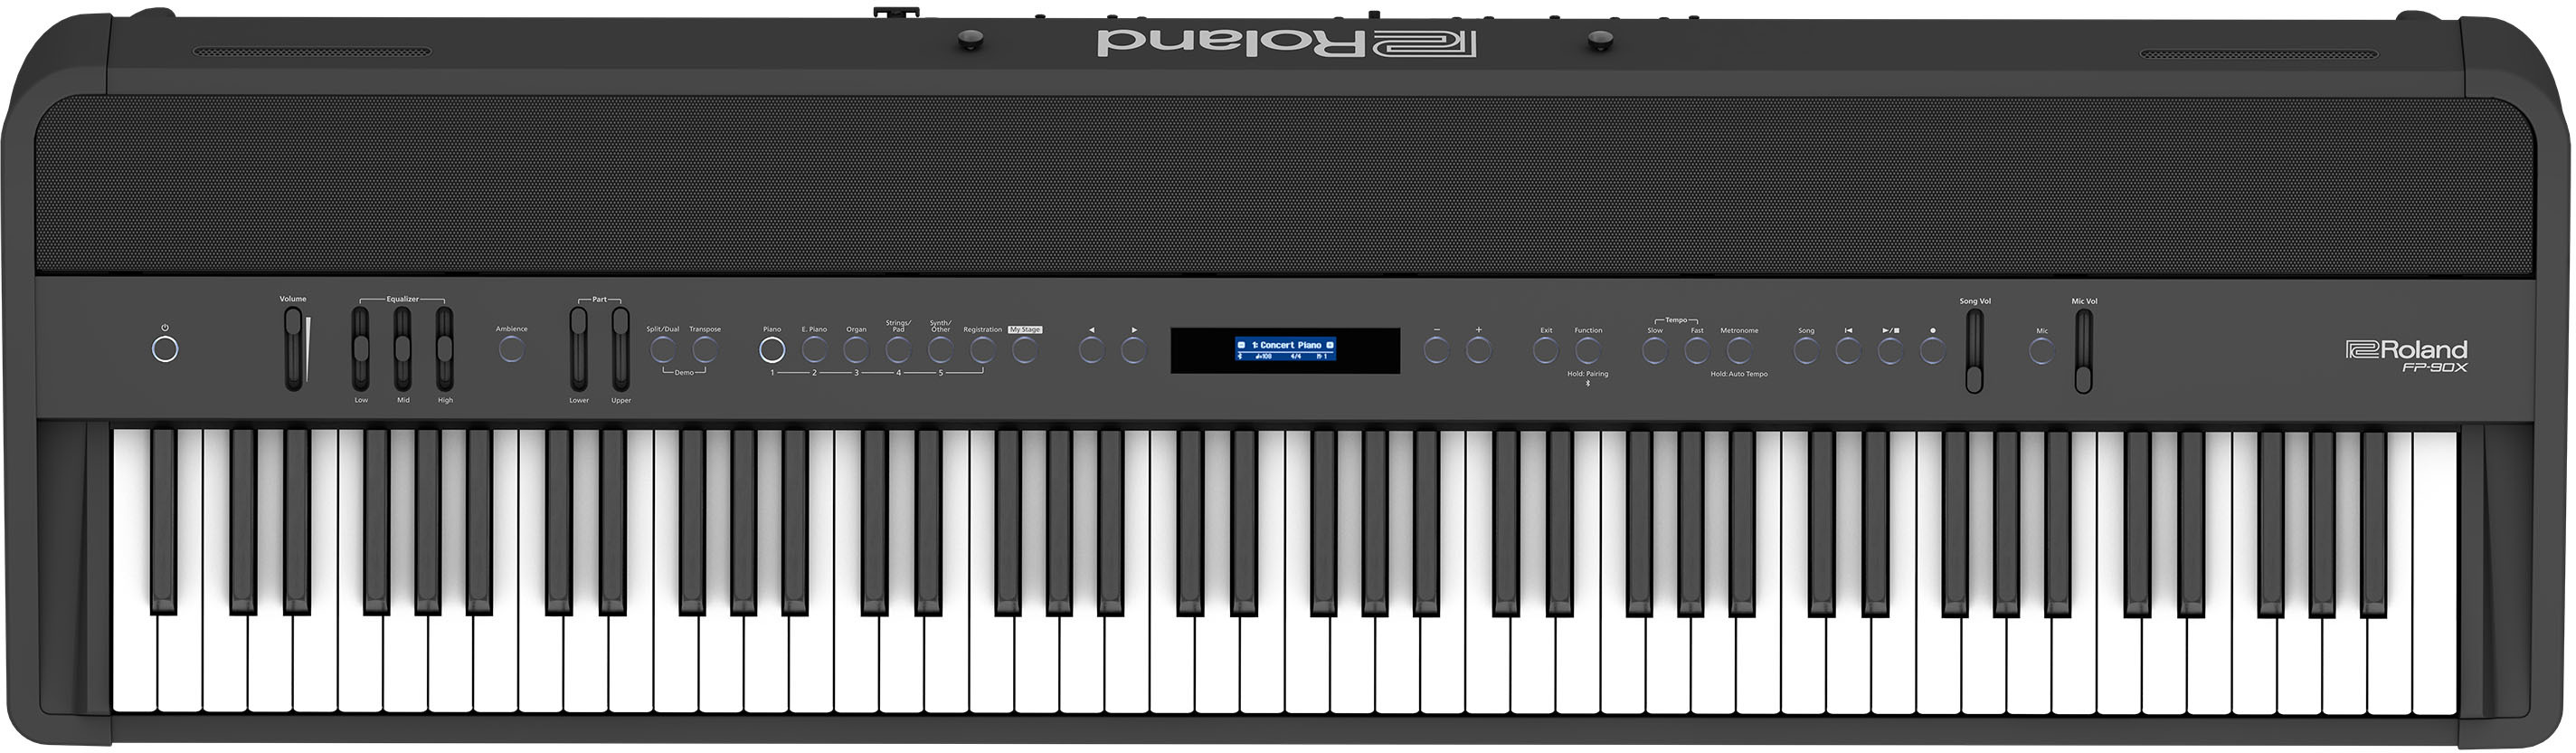 Roland Fp-90x Bk - Piano digital portatil - Main picture